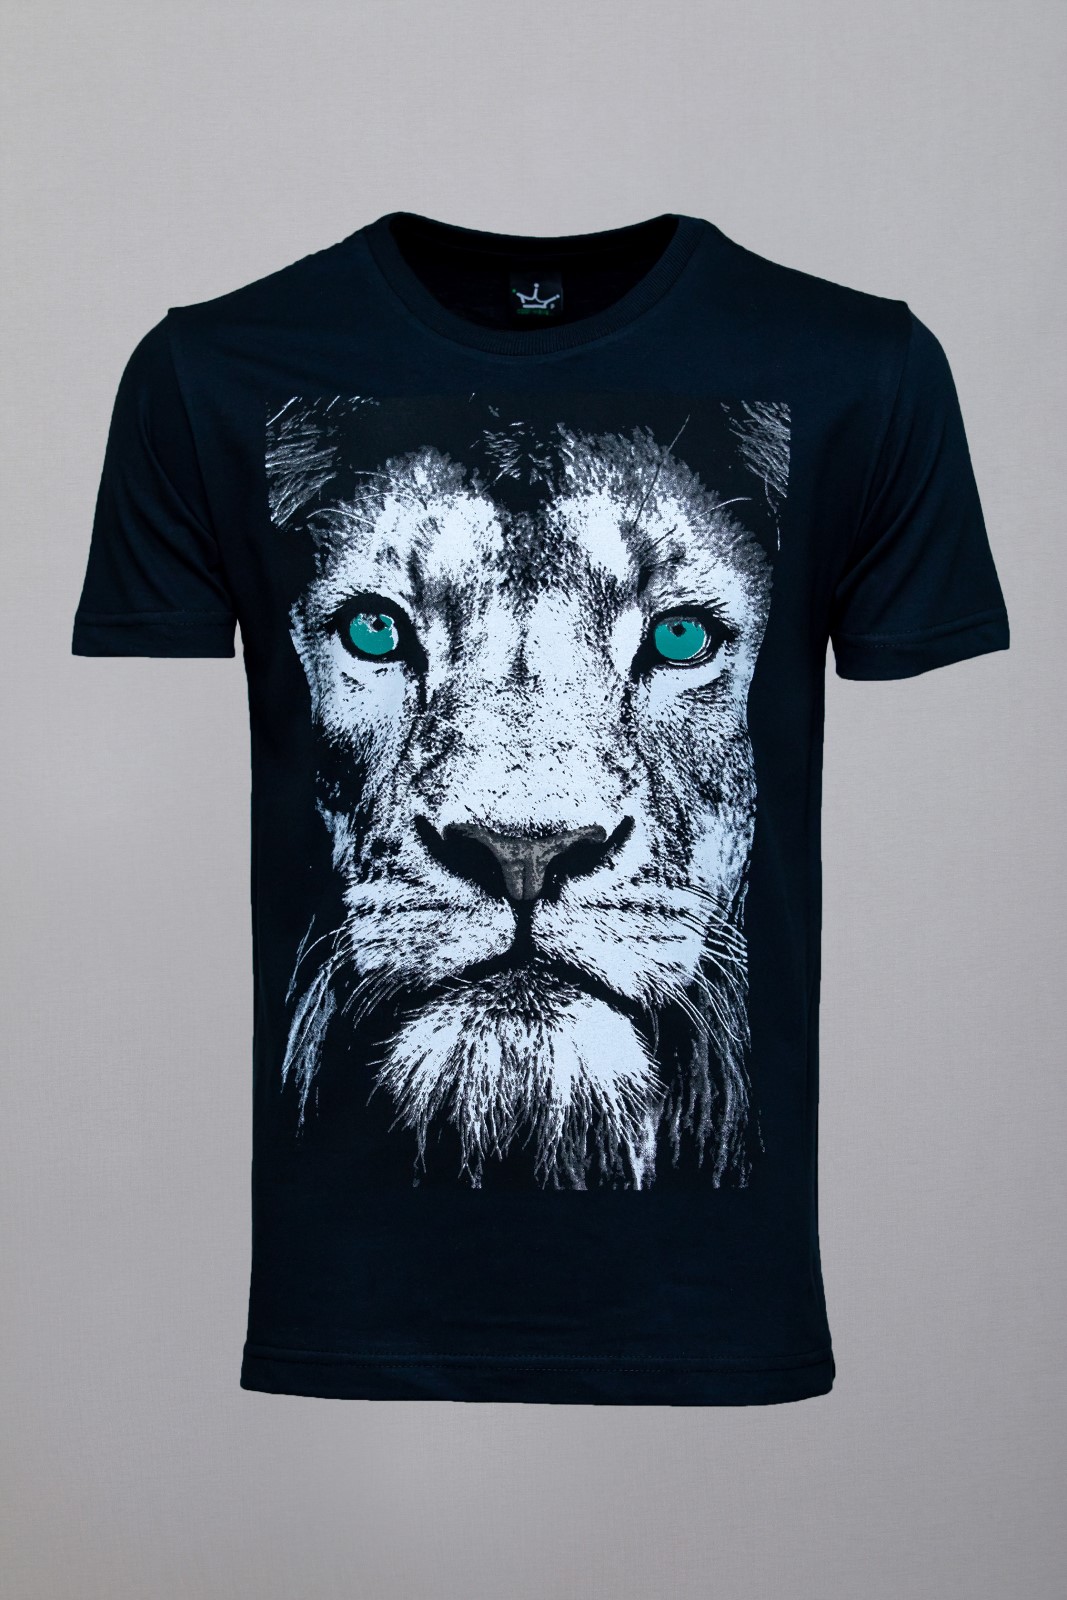 Camiseta CoolWave A Face do Leão